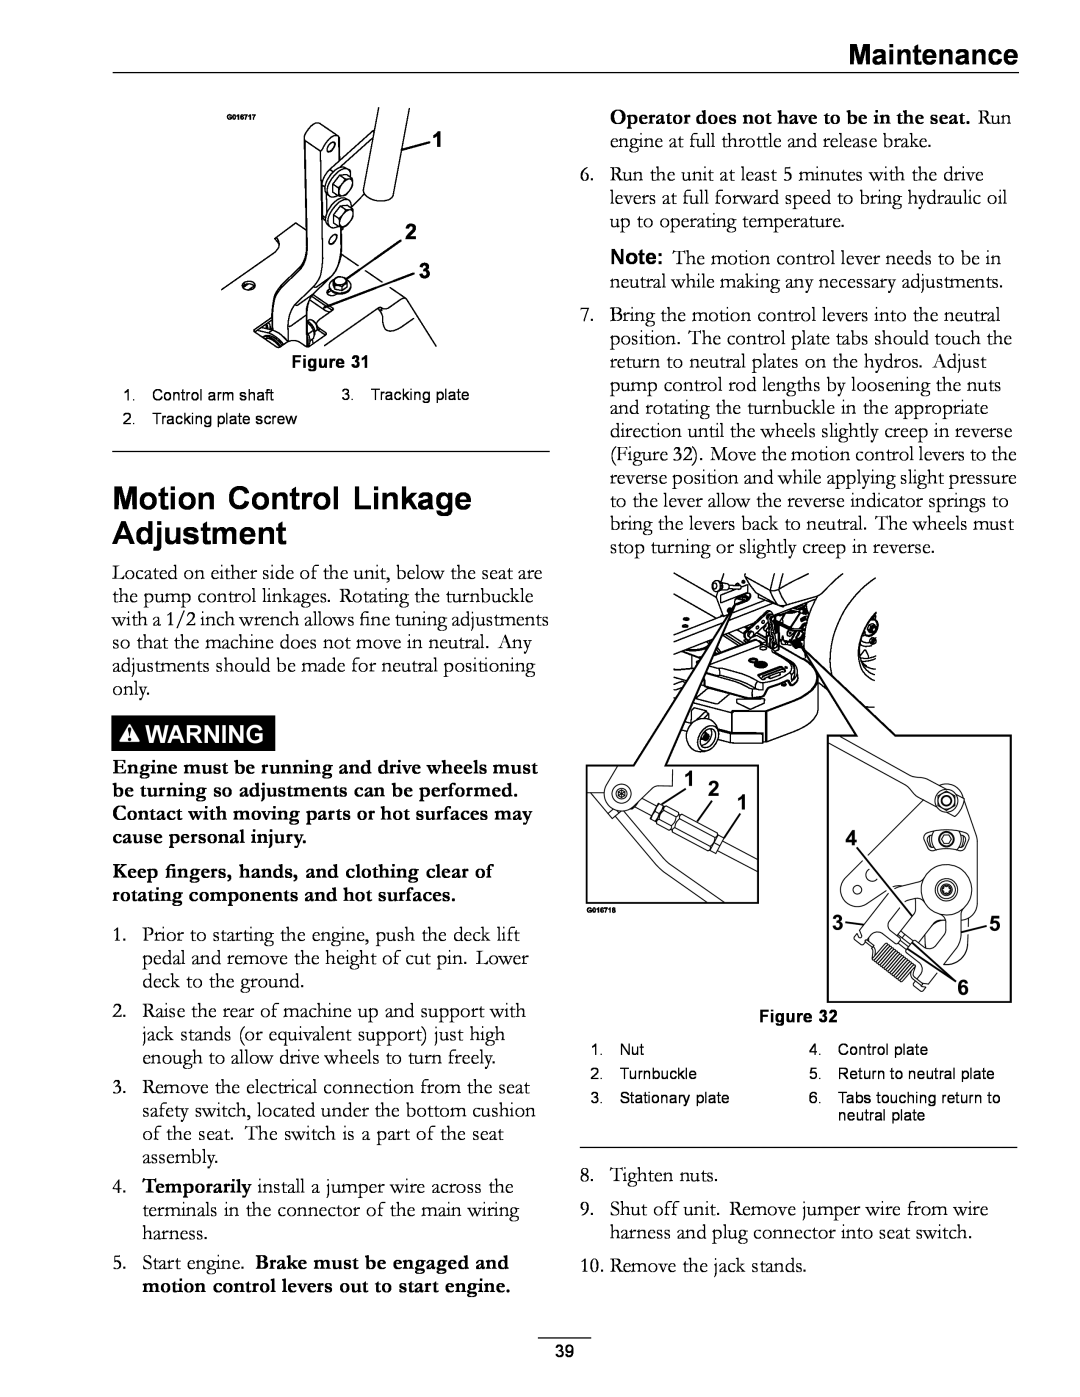 Exmark 000 & higher, 312 manual Motion Control Linkage Adjustment, Maintenance 